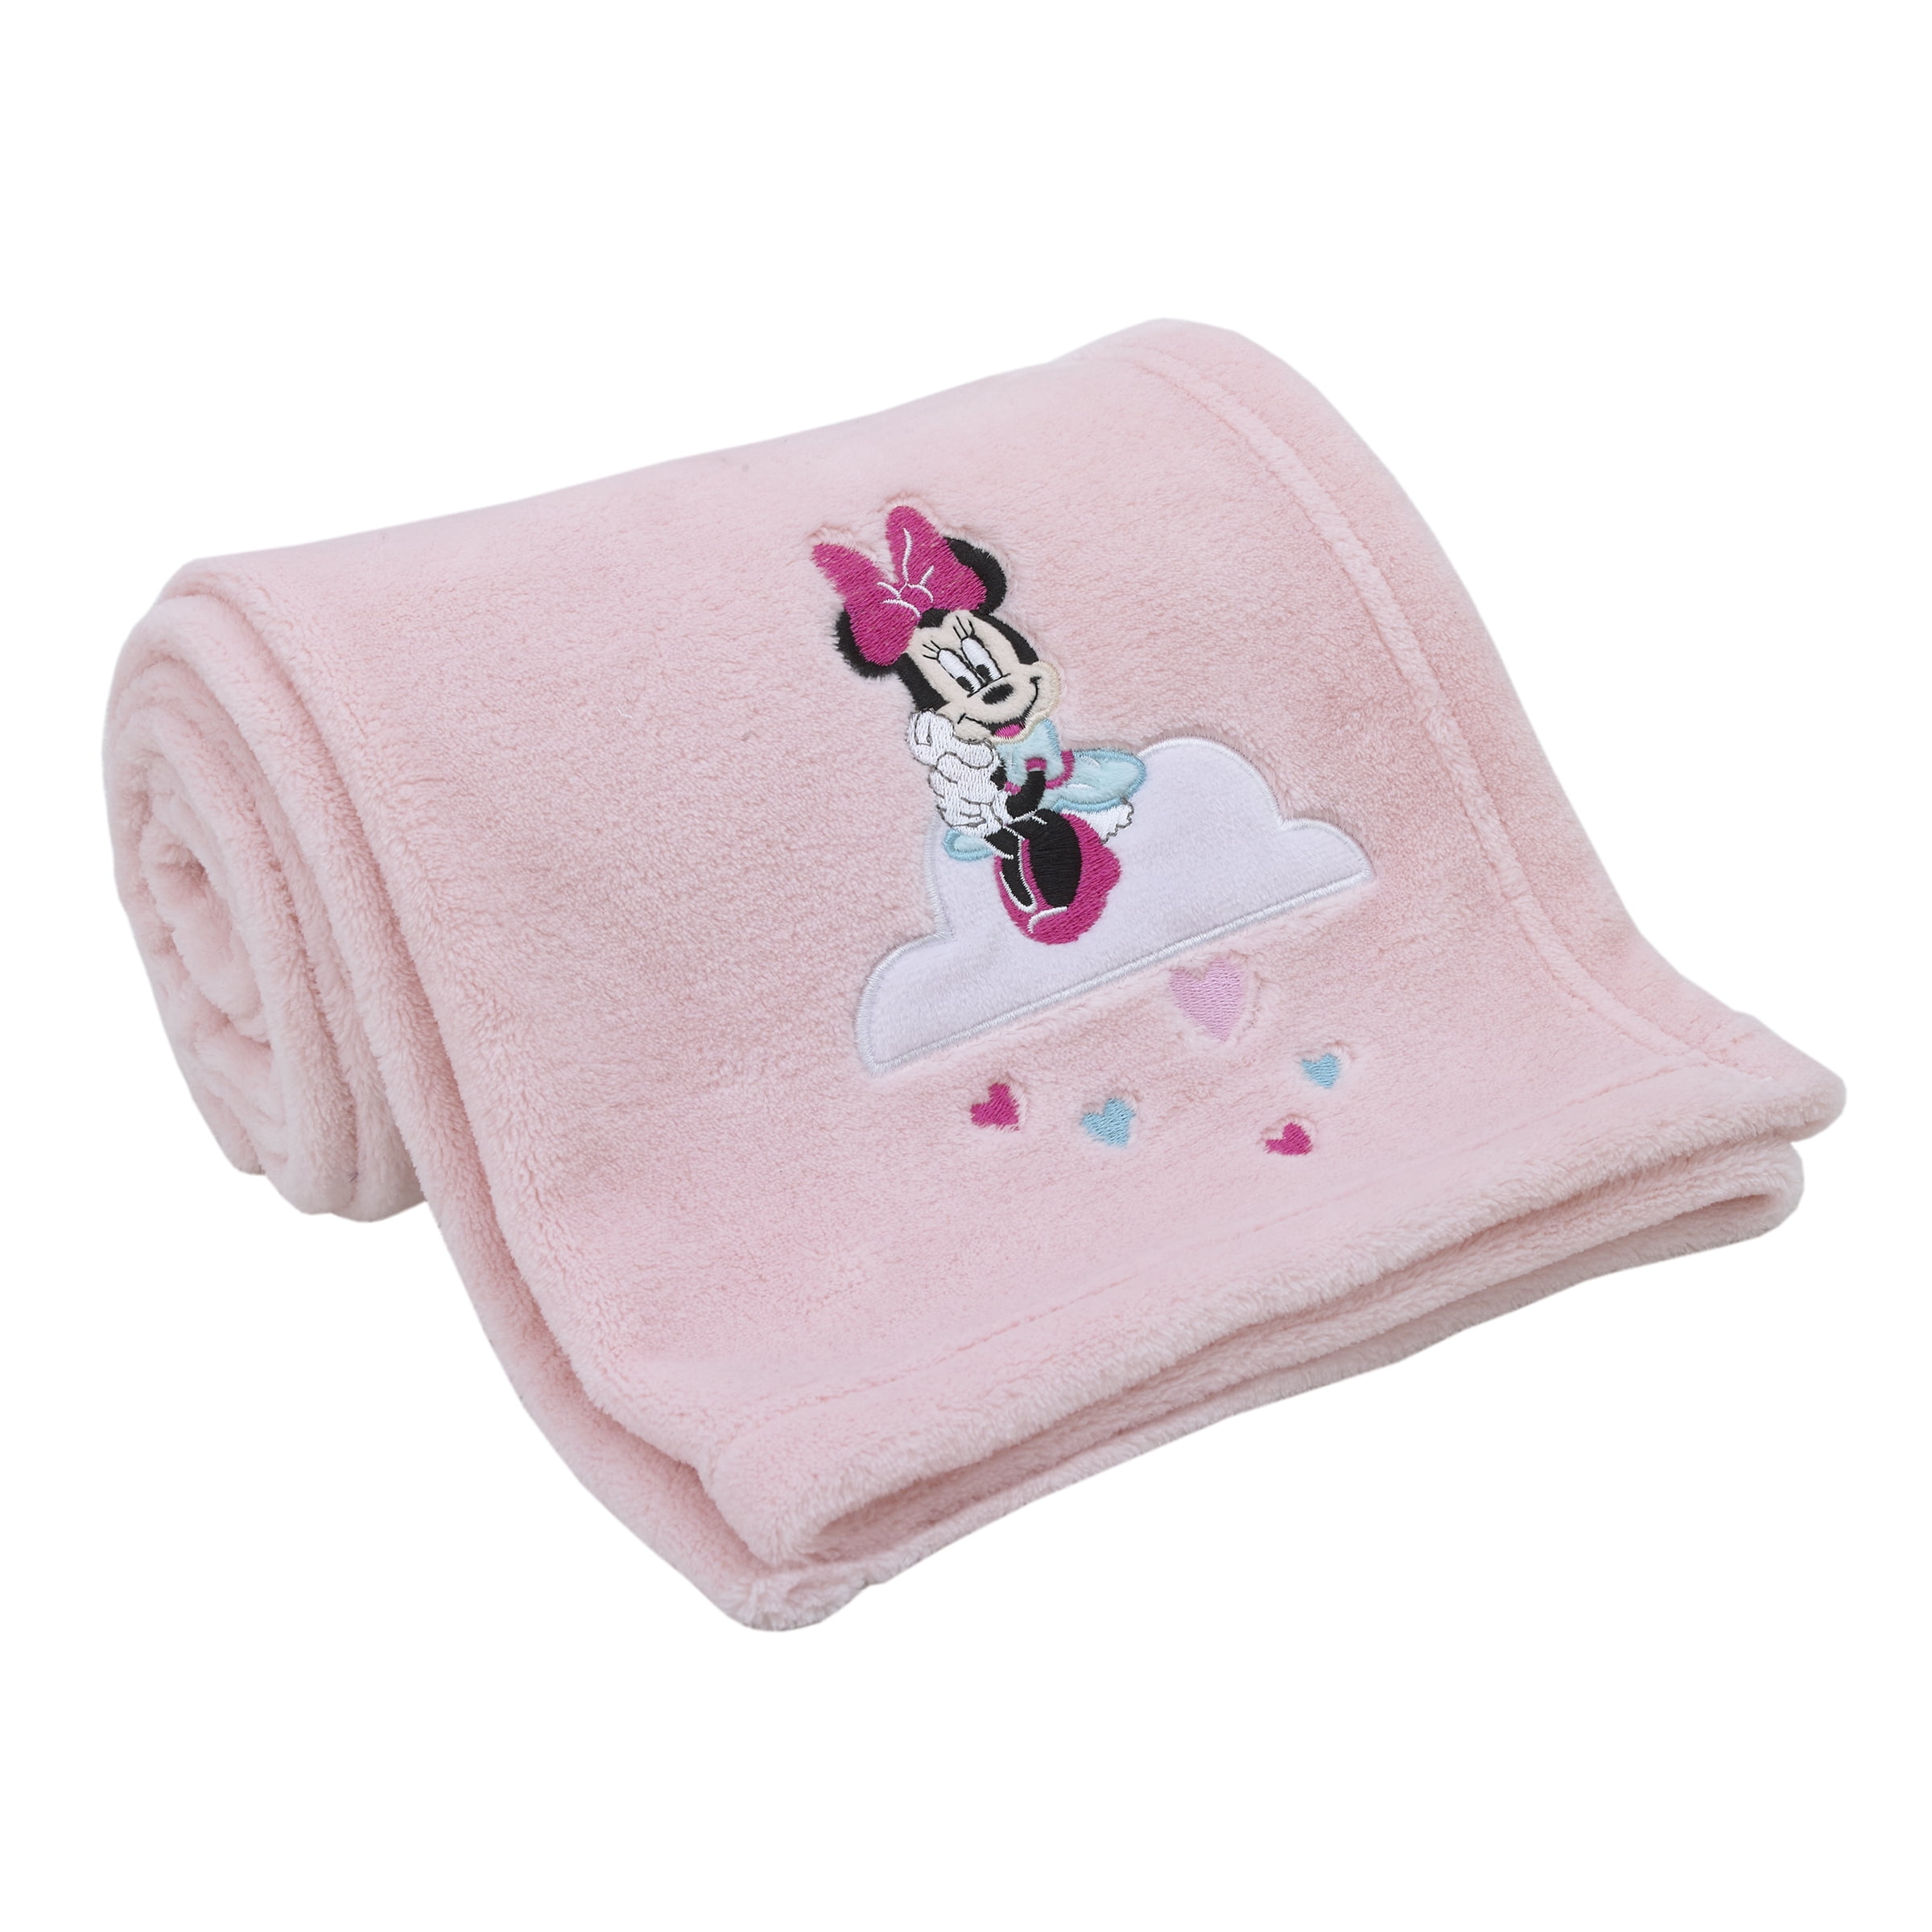 NEW Golden Polka Dot Pink Baby Blanket Warm & Fluffy Super Soft 